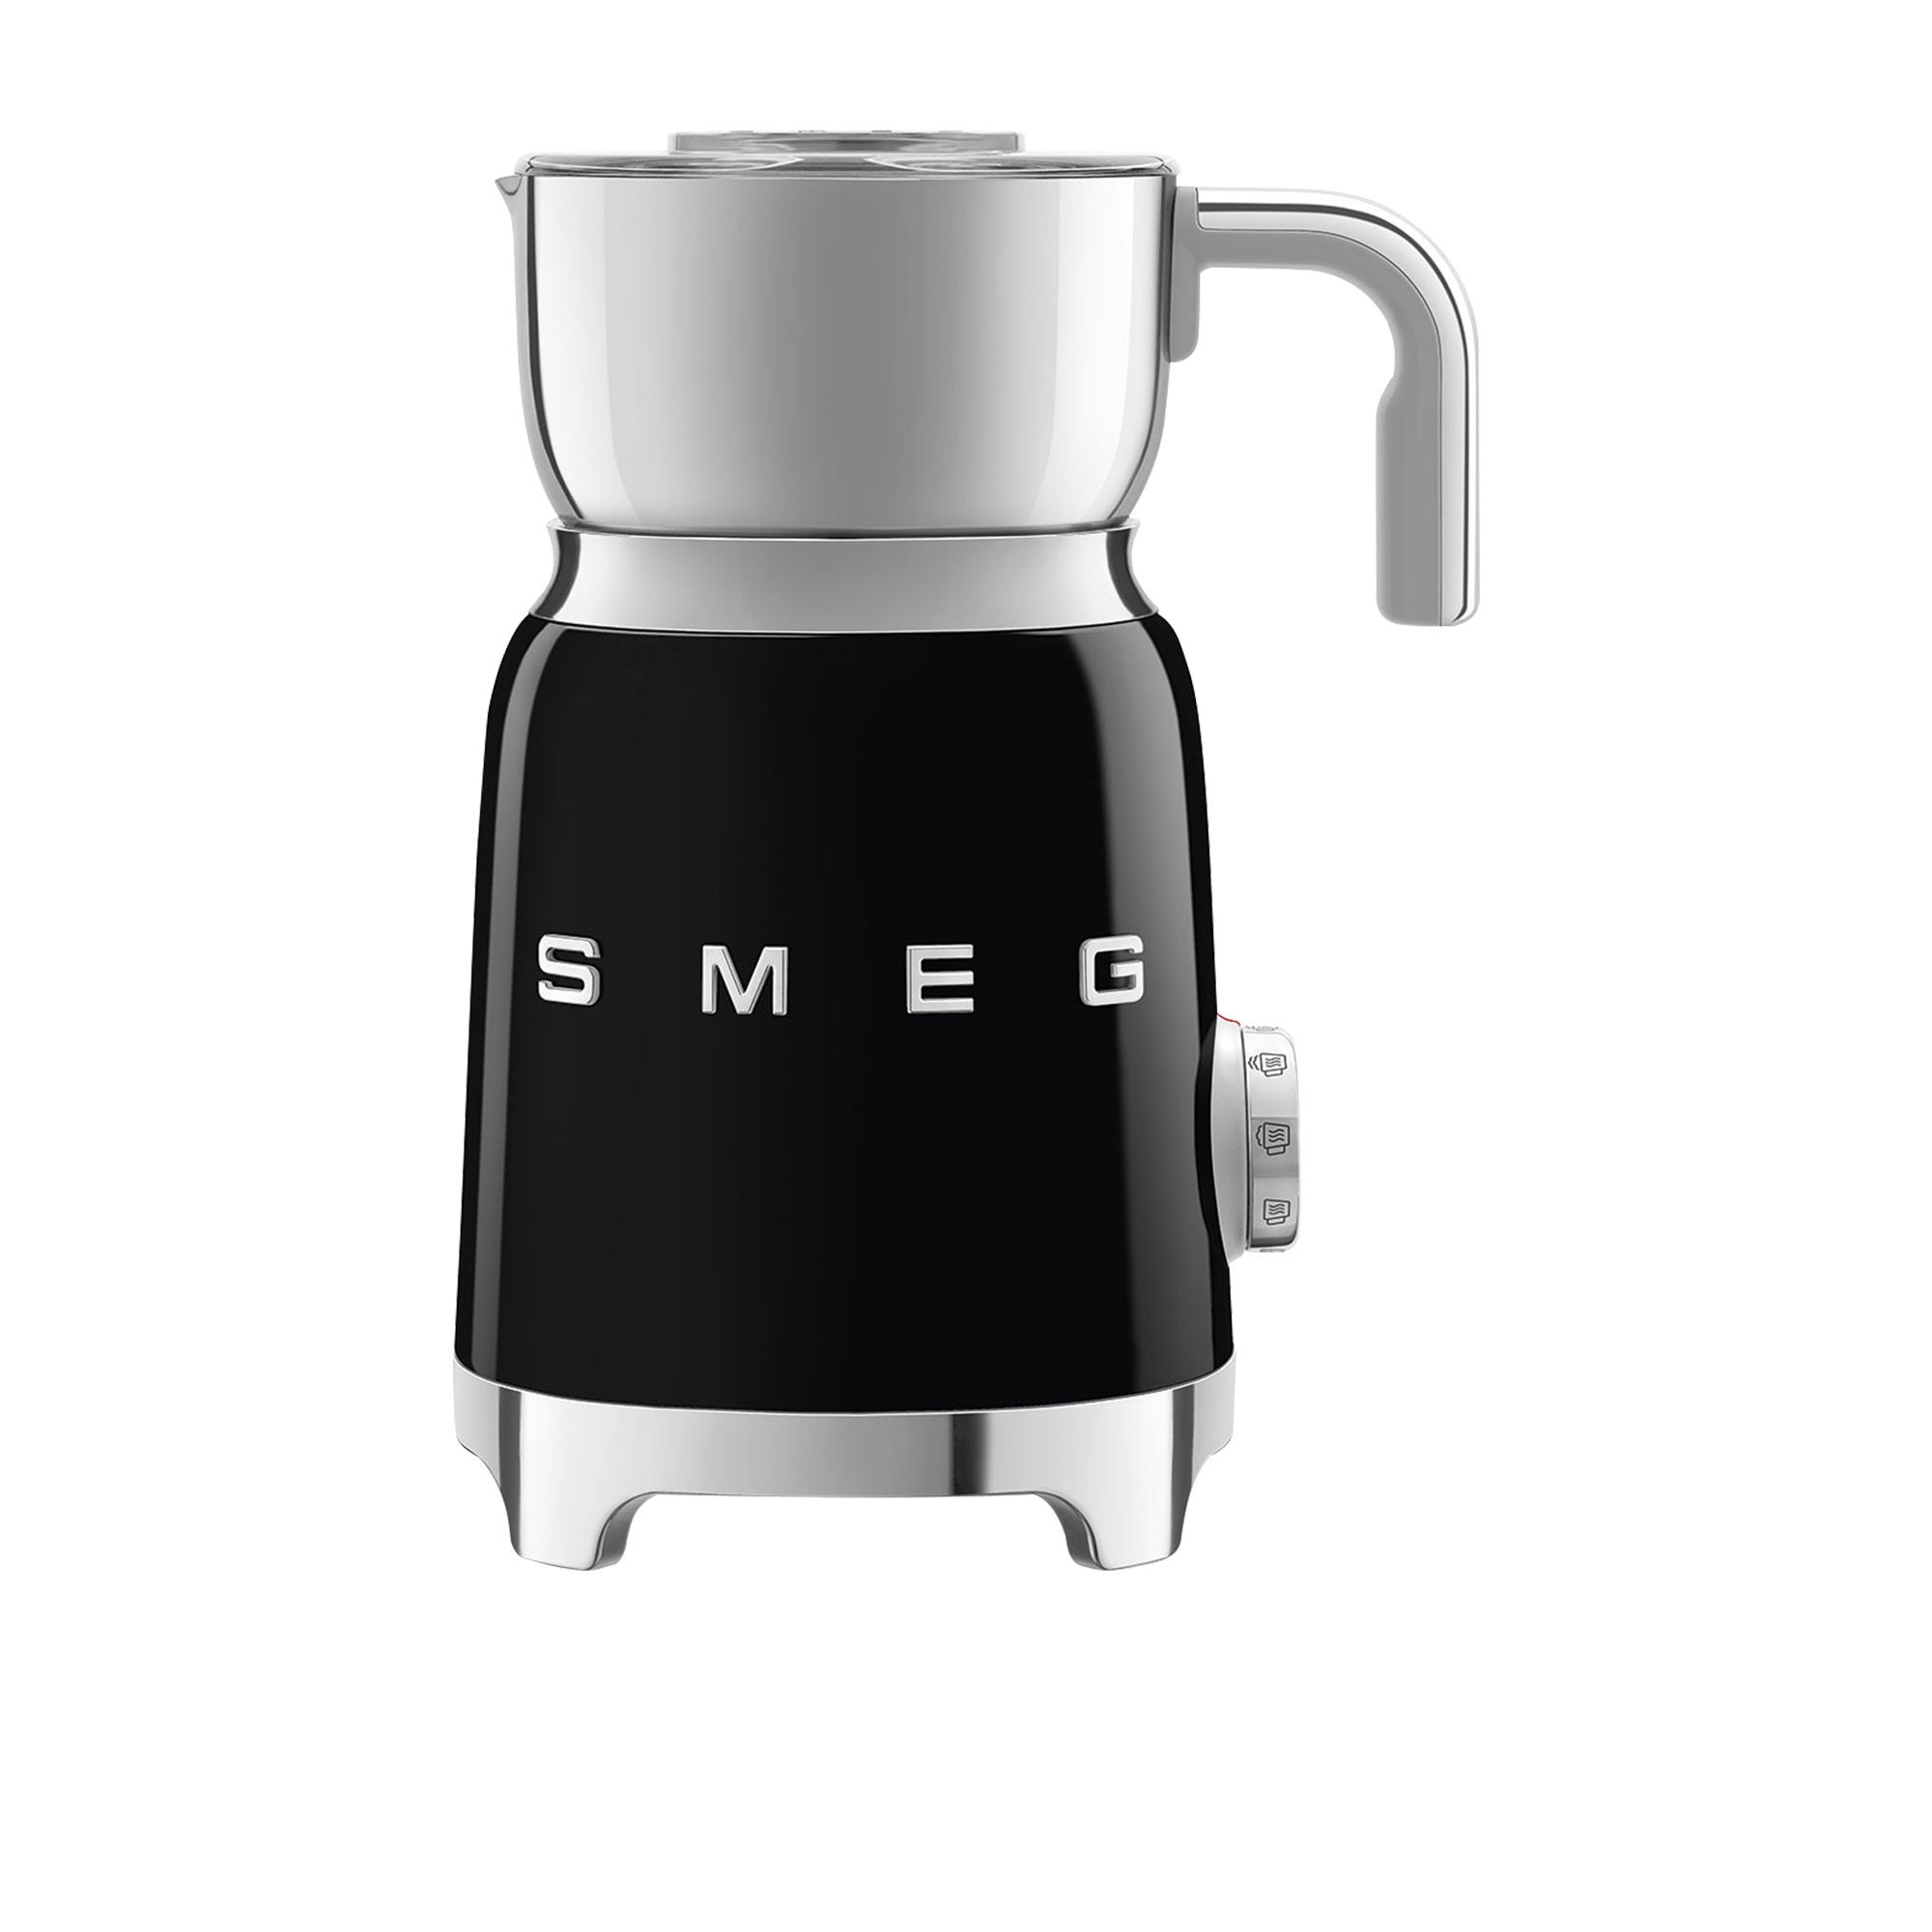 Smeg 50's Retro Style Milk Frother Black Image 1